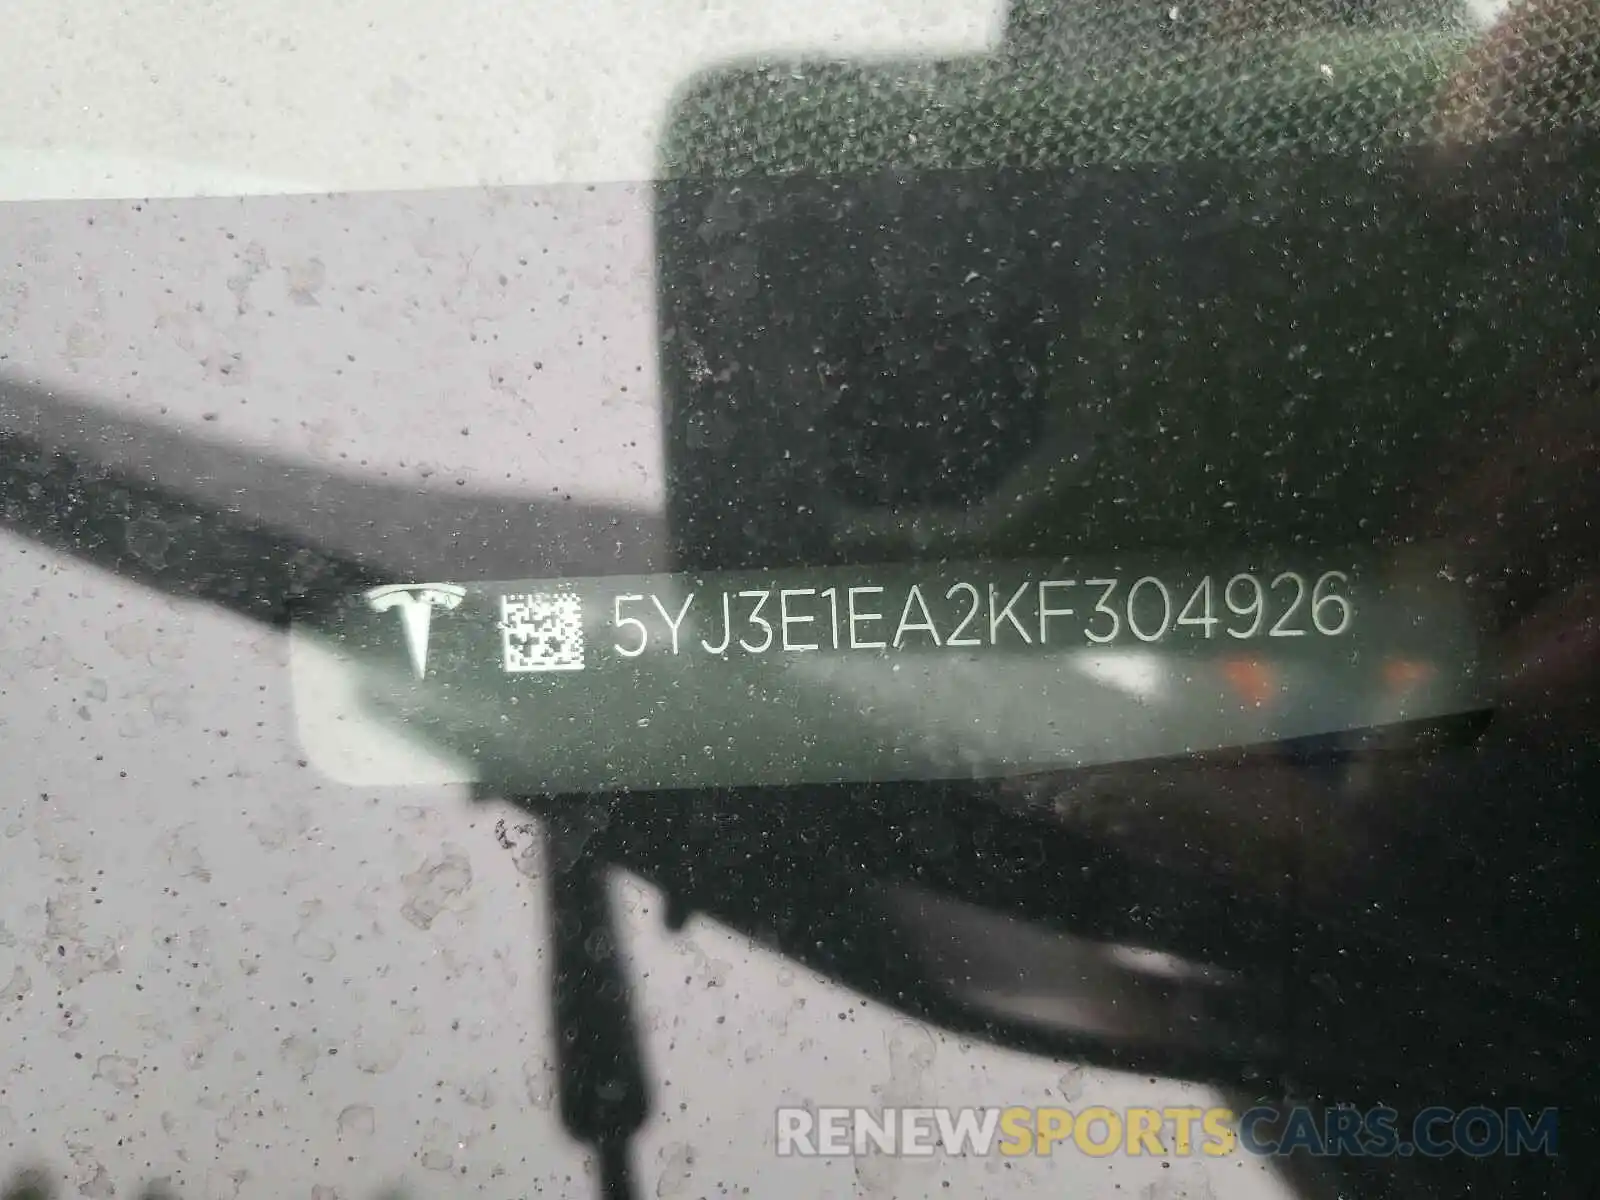 10 Photograph of a damaged car 5YJ3E1EA2KF304926 TESLA MODEL 3 2019